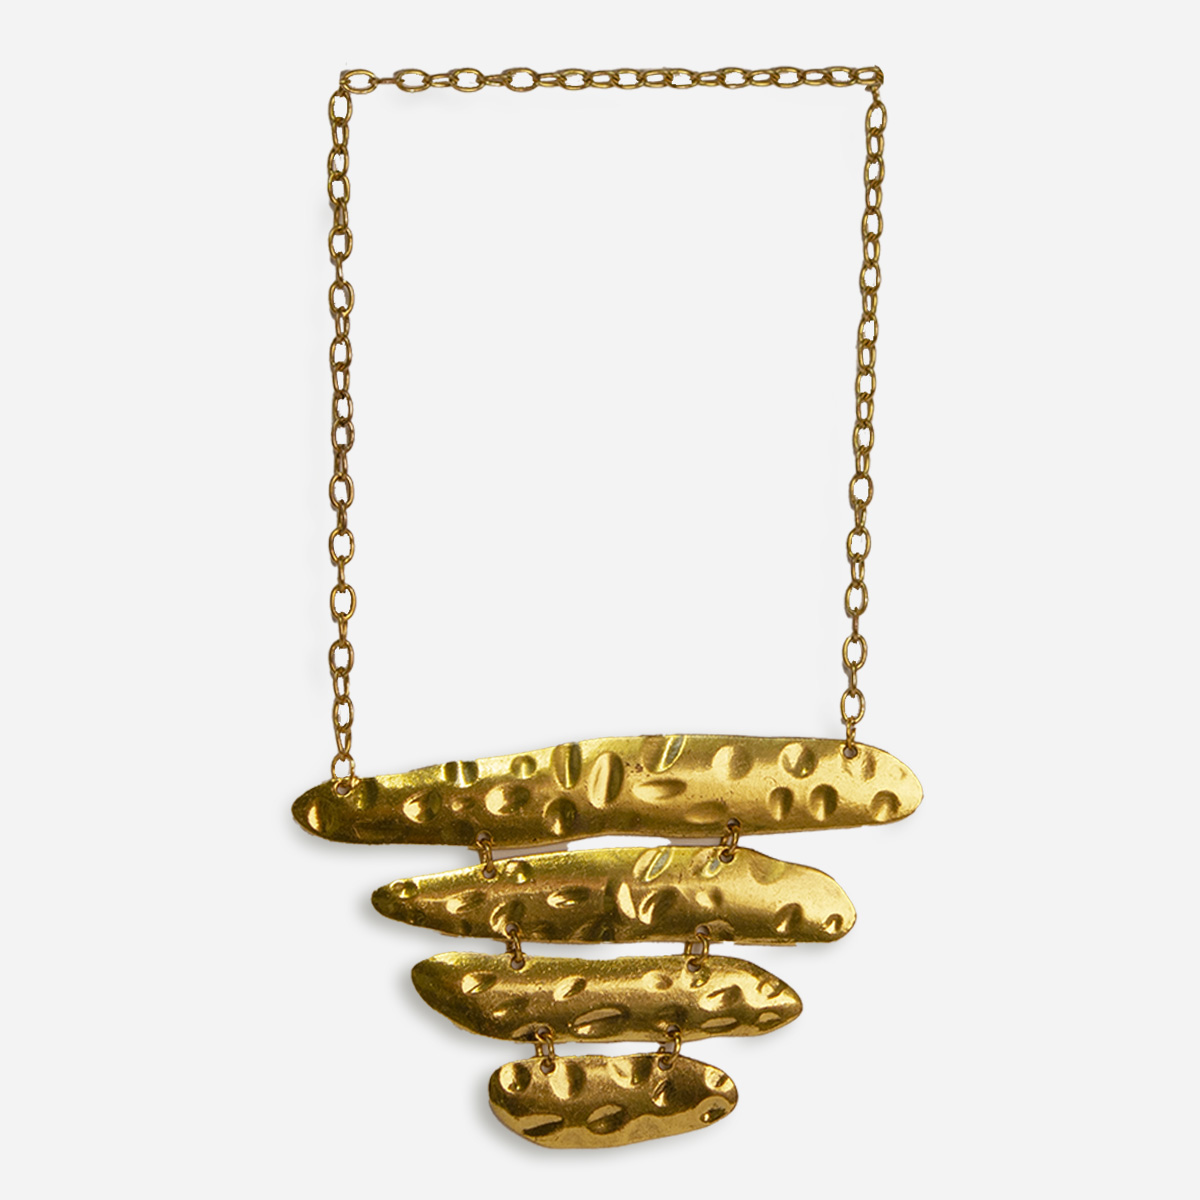 Modernist brass necklace